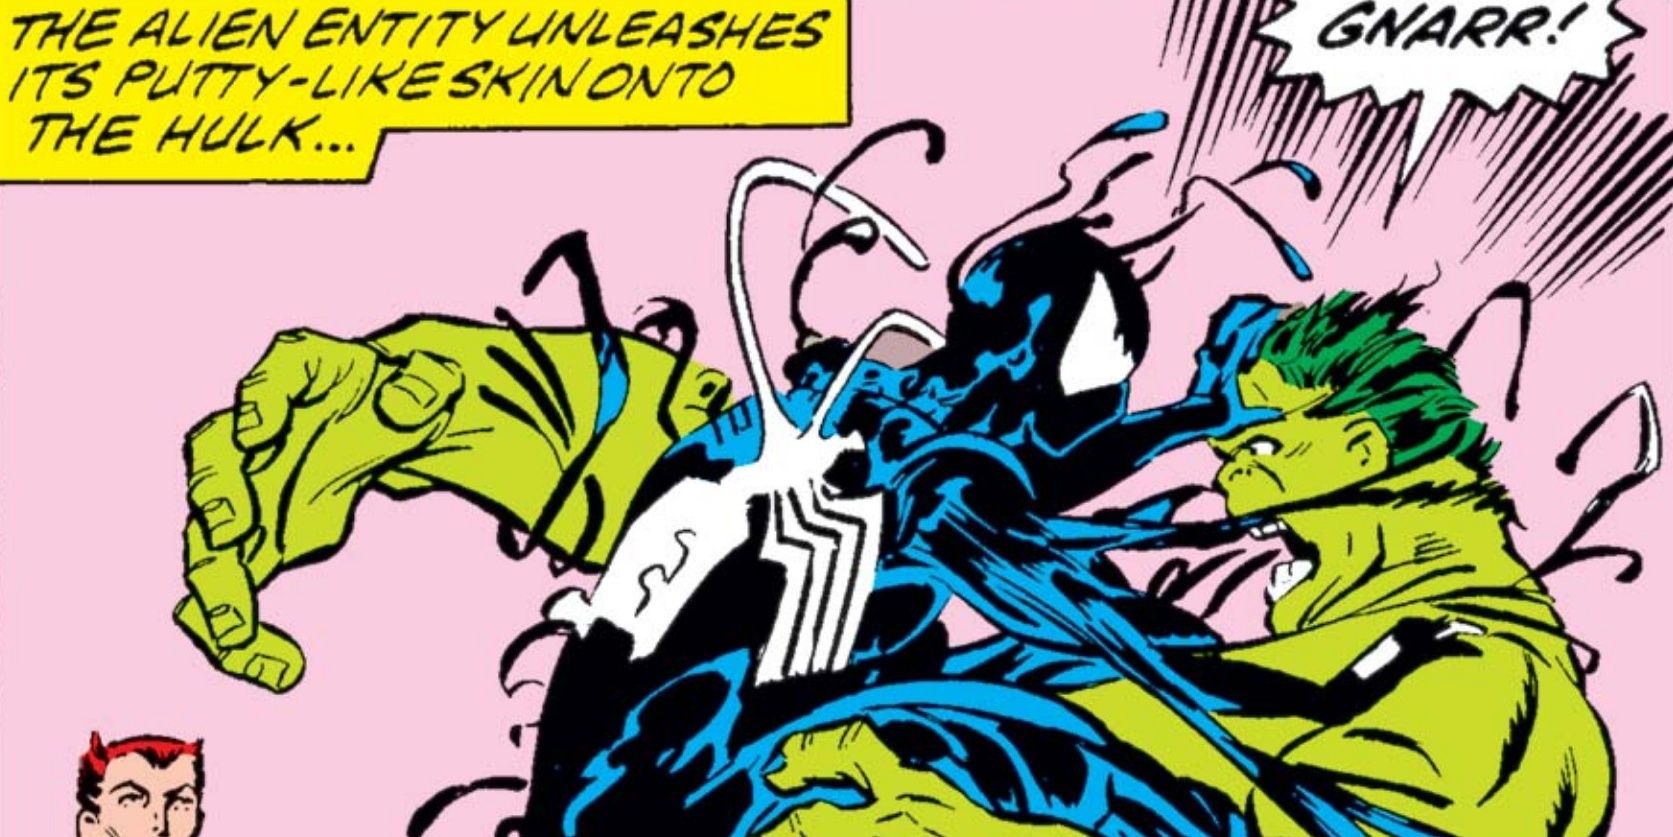 Spider-Man with symbiote attacks the Hulk